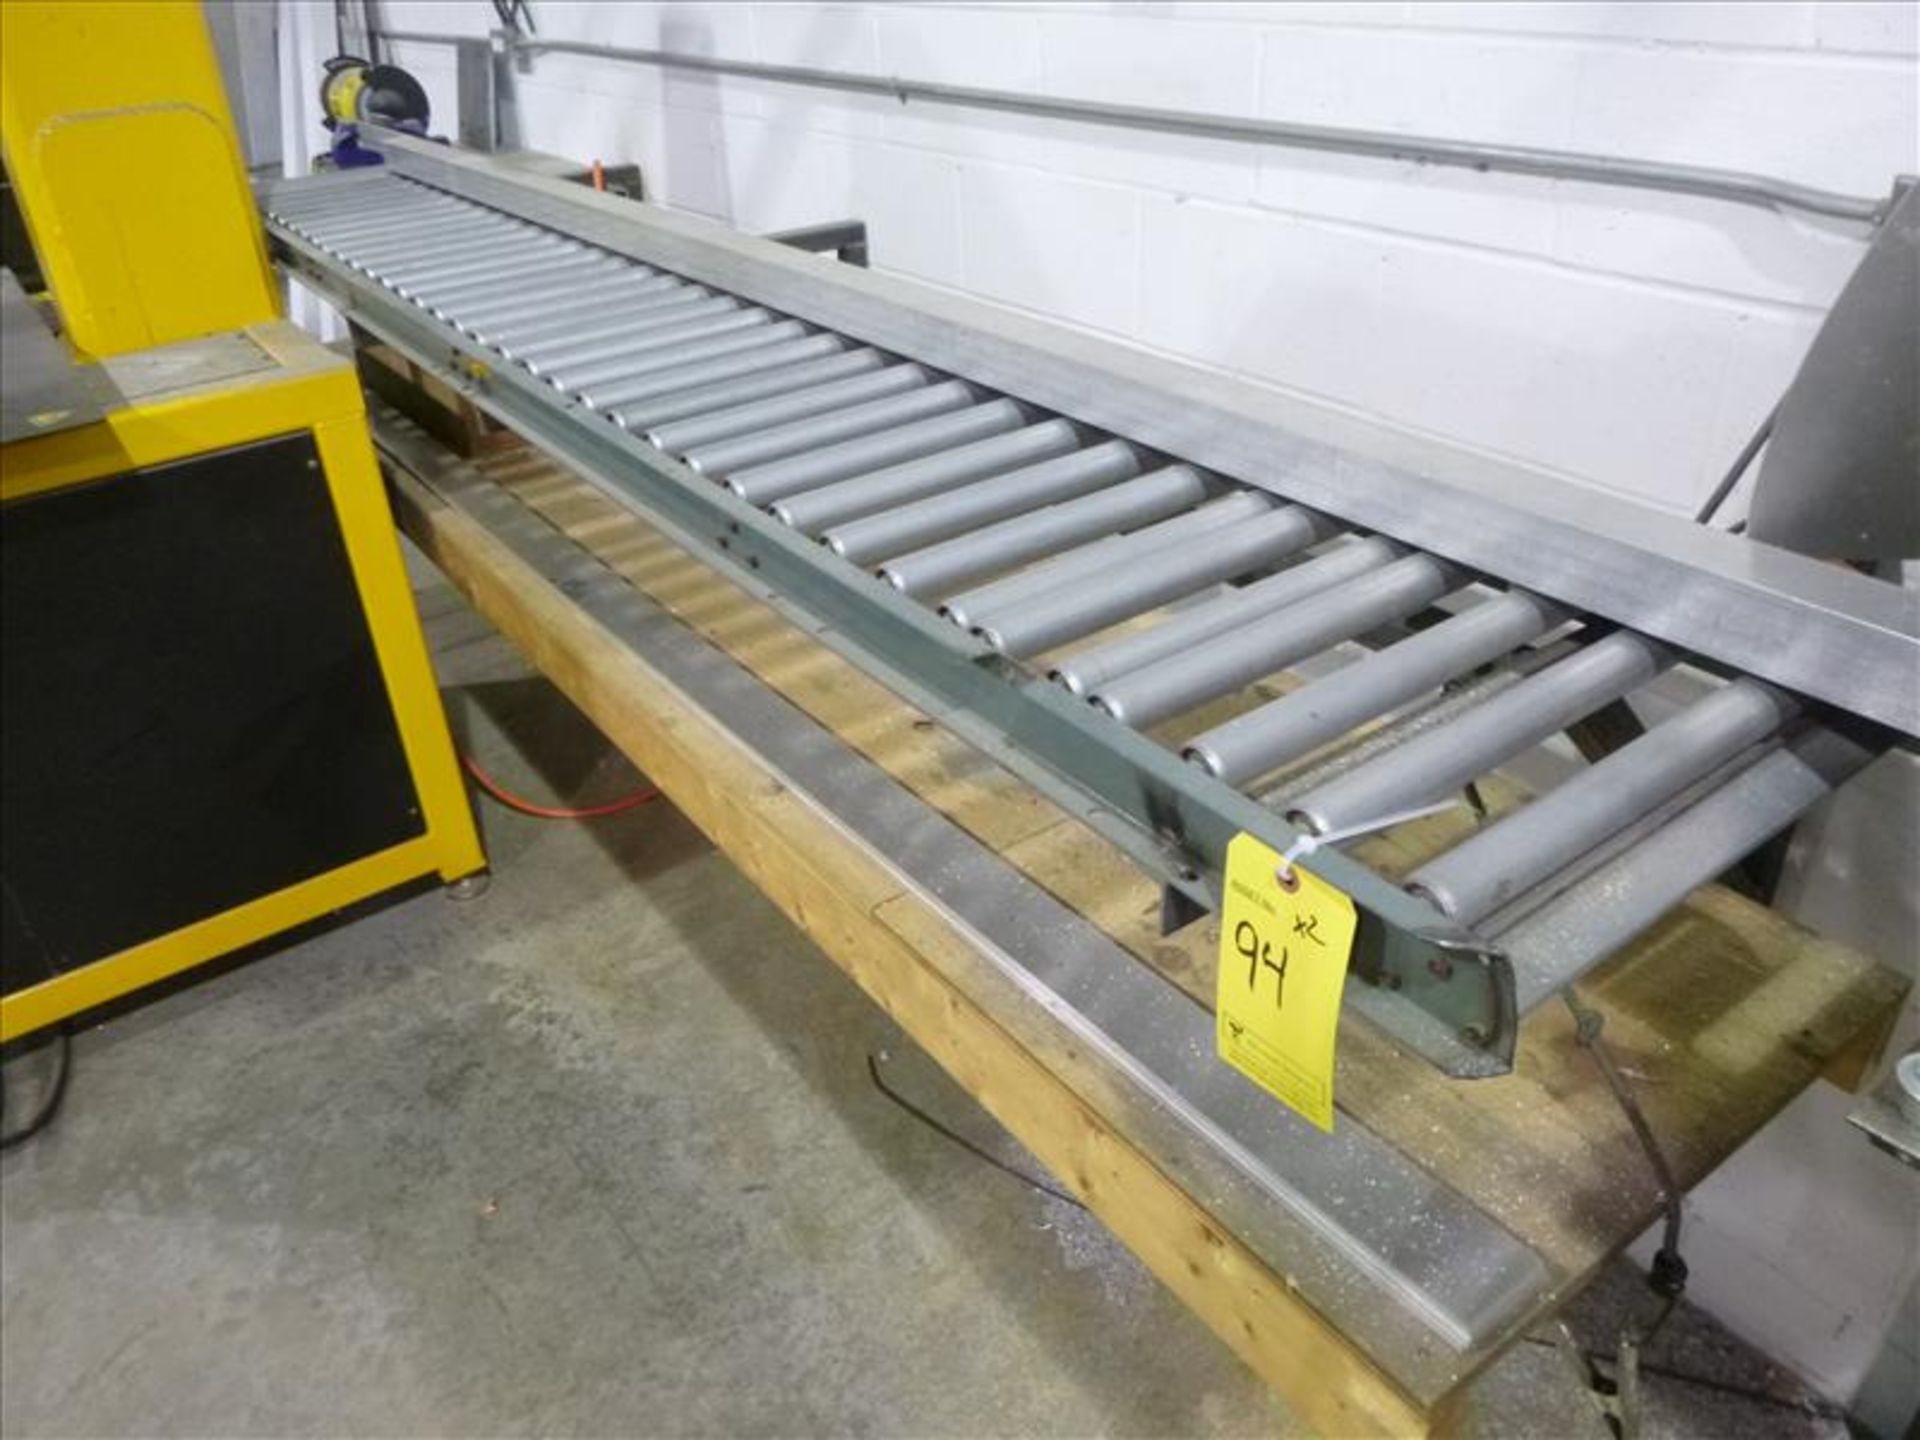 (2) Hytrol roller conveyors, 16" x 9' ea. c/w wall mounts